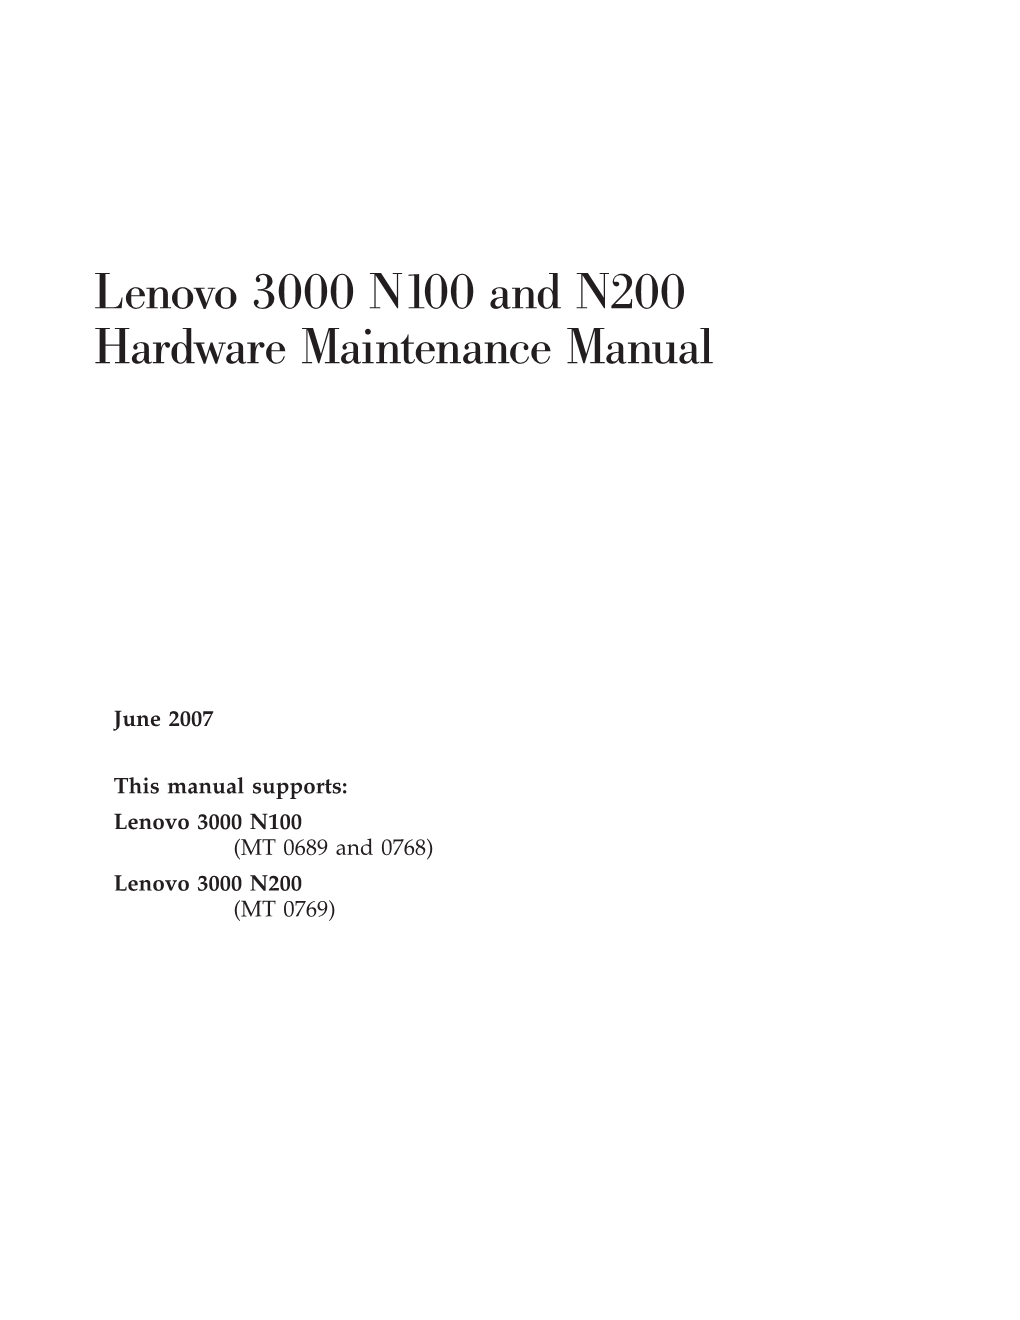 Lenovo 3000 N100 and N200 Hardware Maintenance Manual